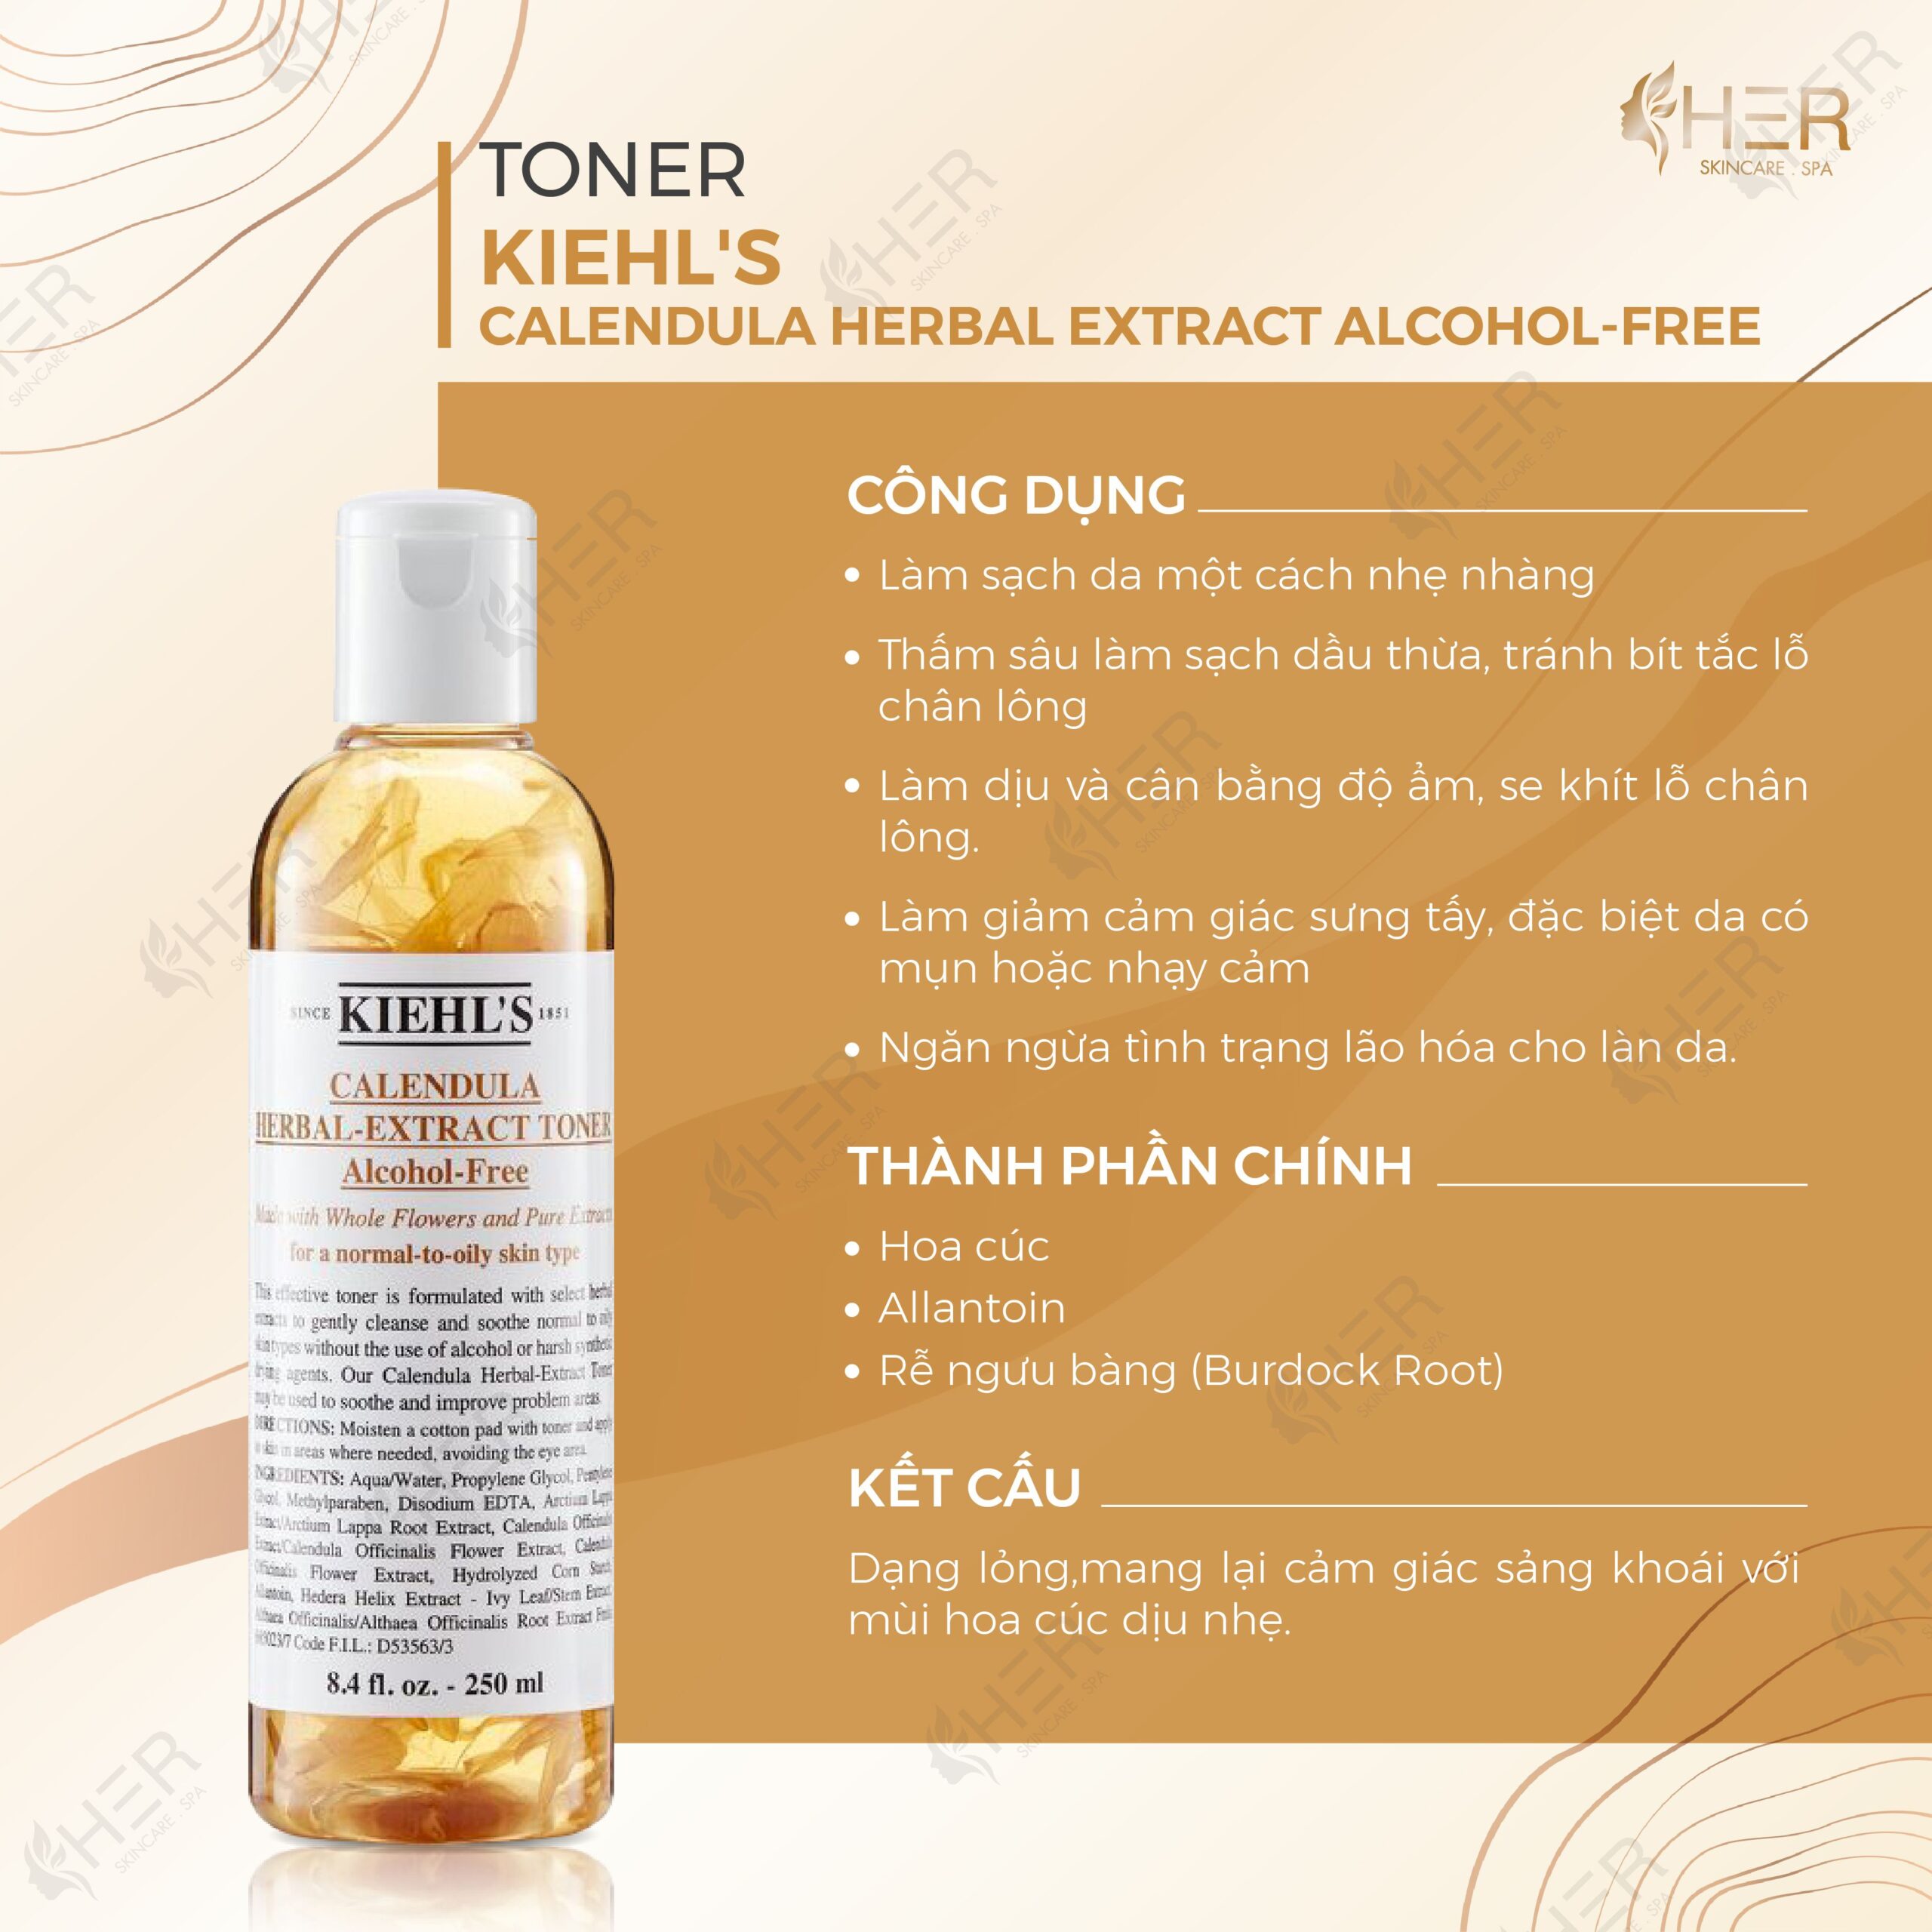 Toner Kiehl's Calendula Herbal Extract Alcohol-Free